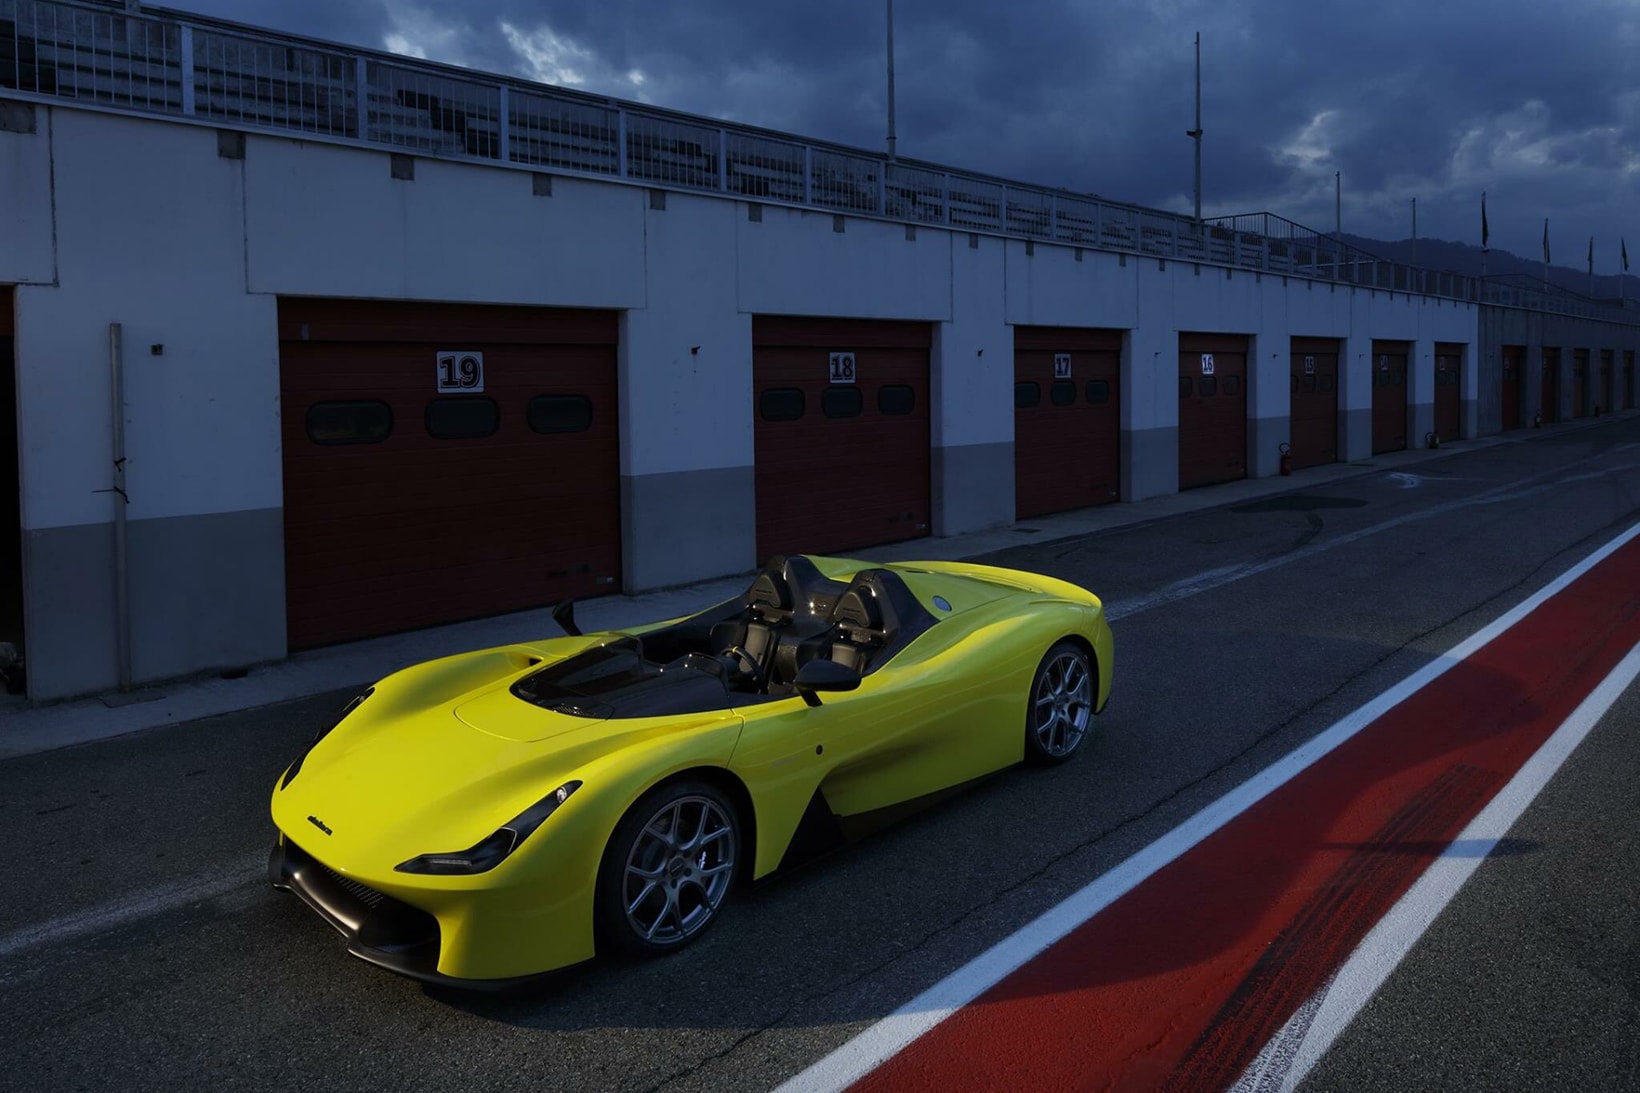 Dallara Stradale Road Car Unveiled Roadster yellow convertible sportscar sports race racecar Italian italy carbon-fiber no doors doorless